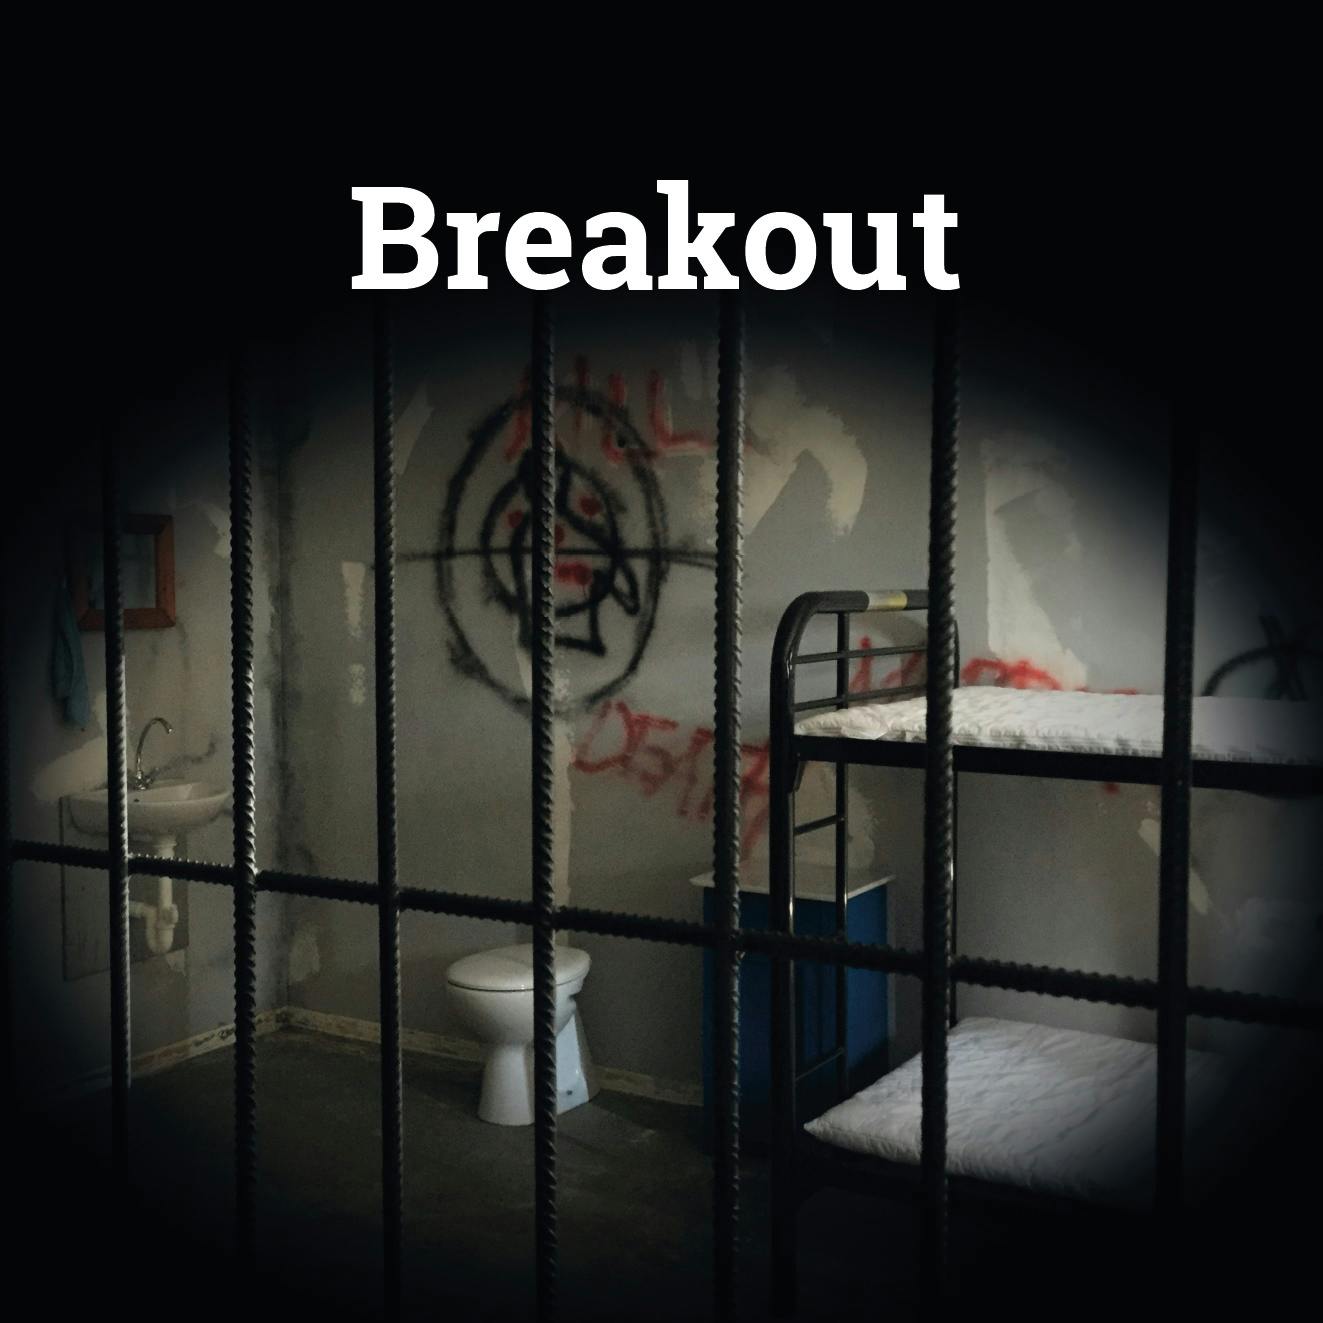 Gra Escape Room „Breakout” w Saarbrücken